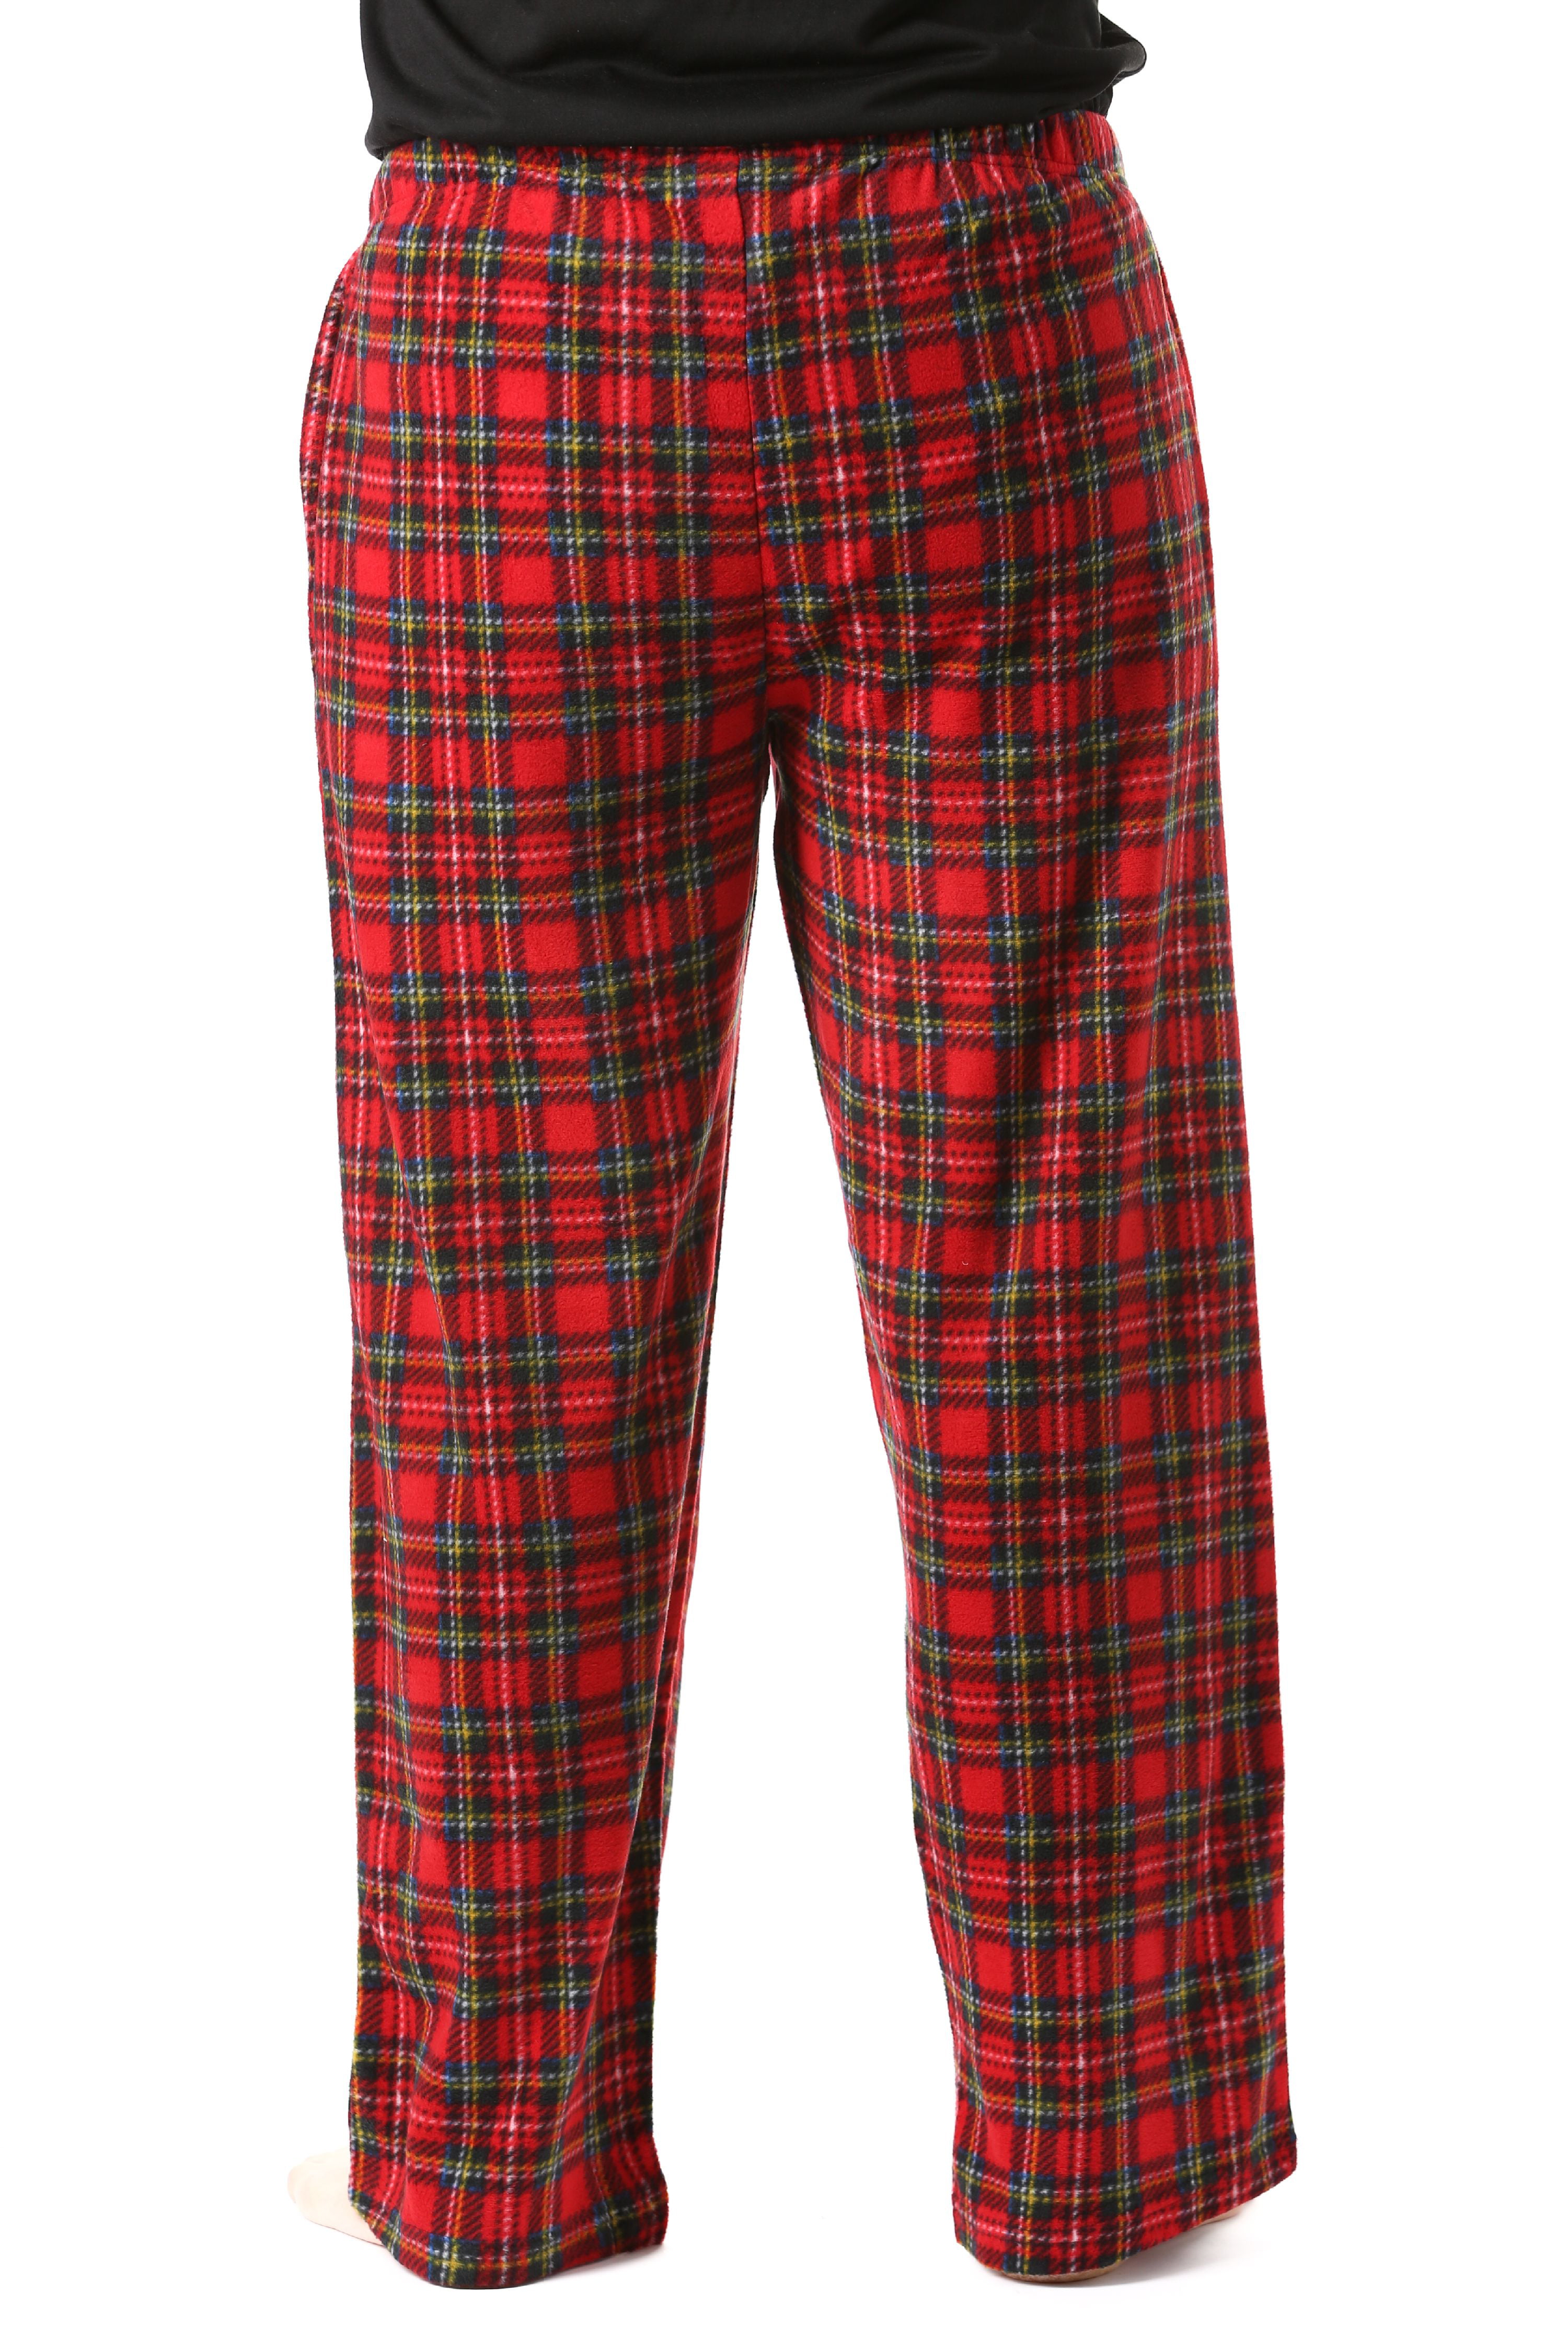 #followme Microfleece Men's Buffalo Plaid Pajama Pants with Pockets (Grey Buffalo  Plaid, Small) 